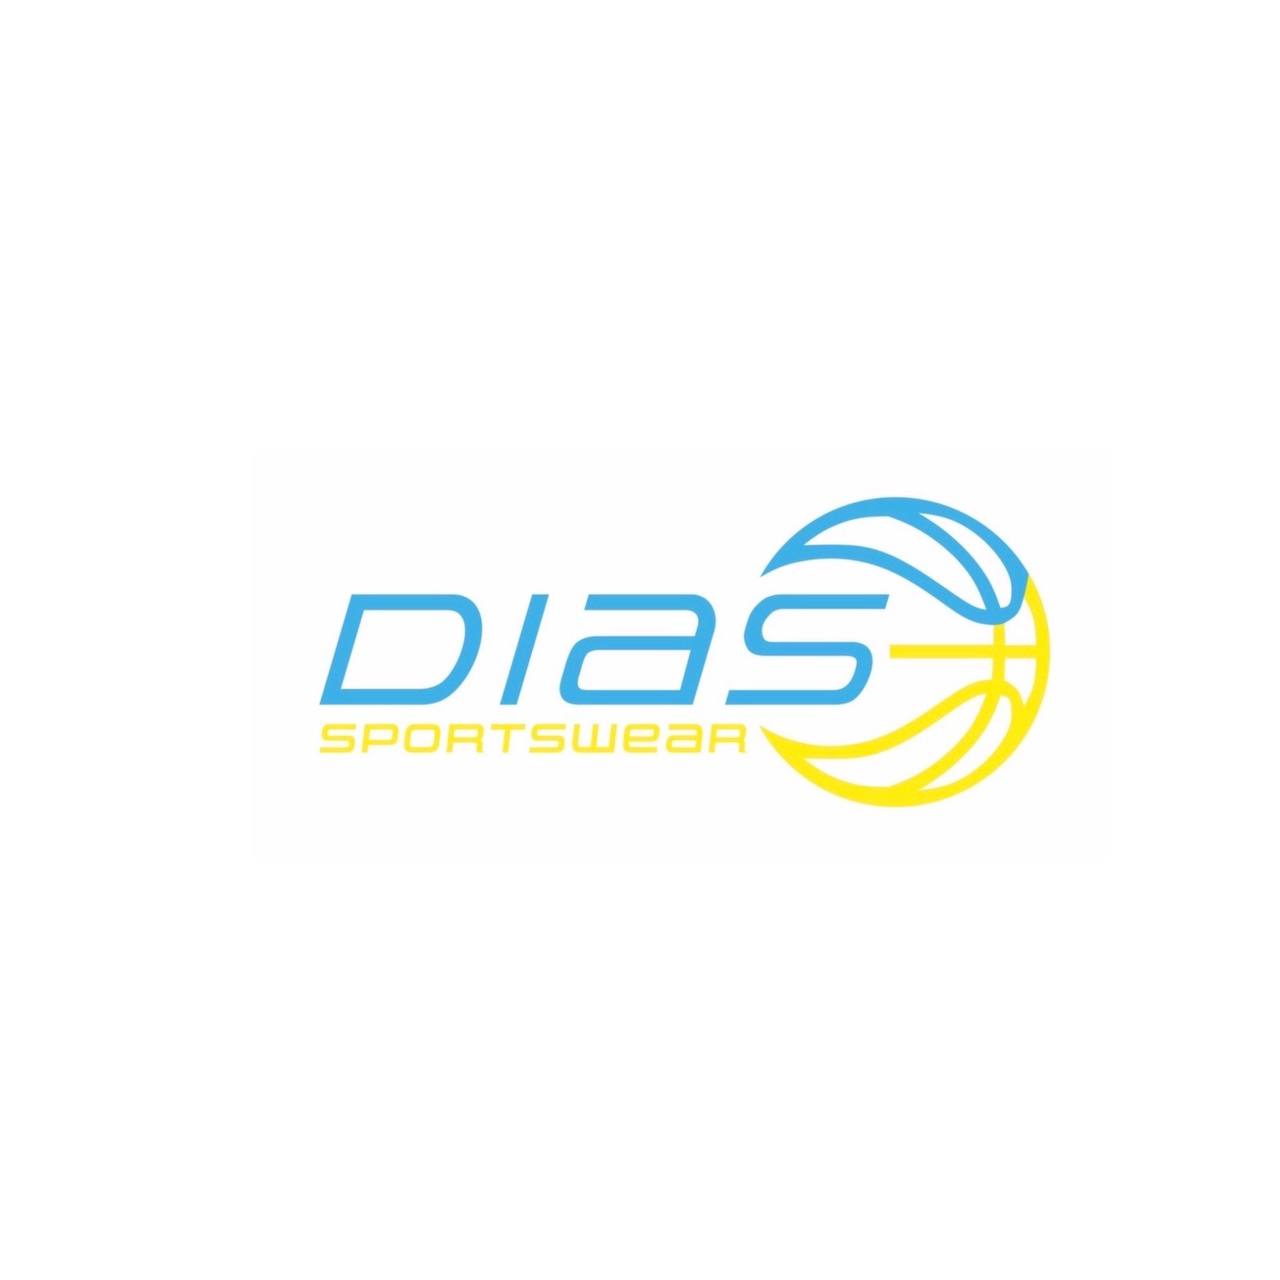 Dias український виробник спортивного одягу